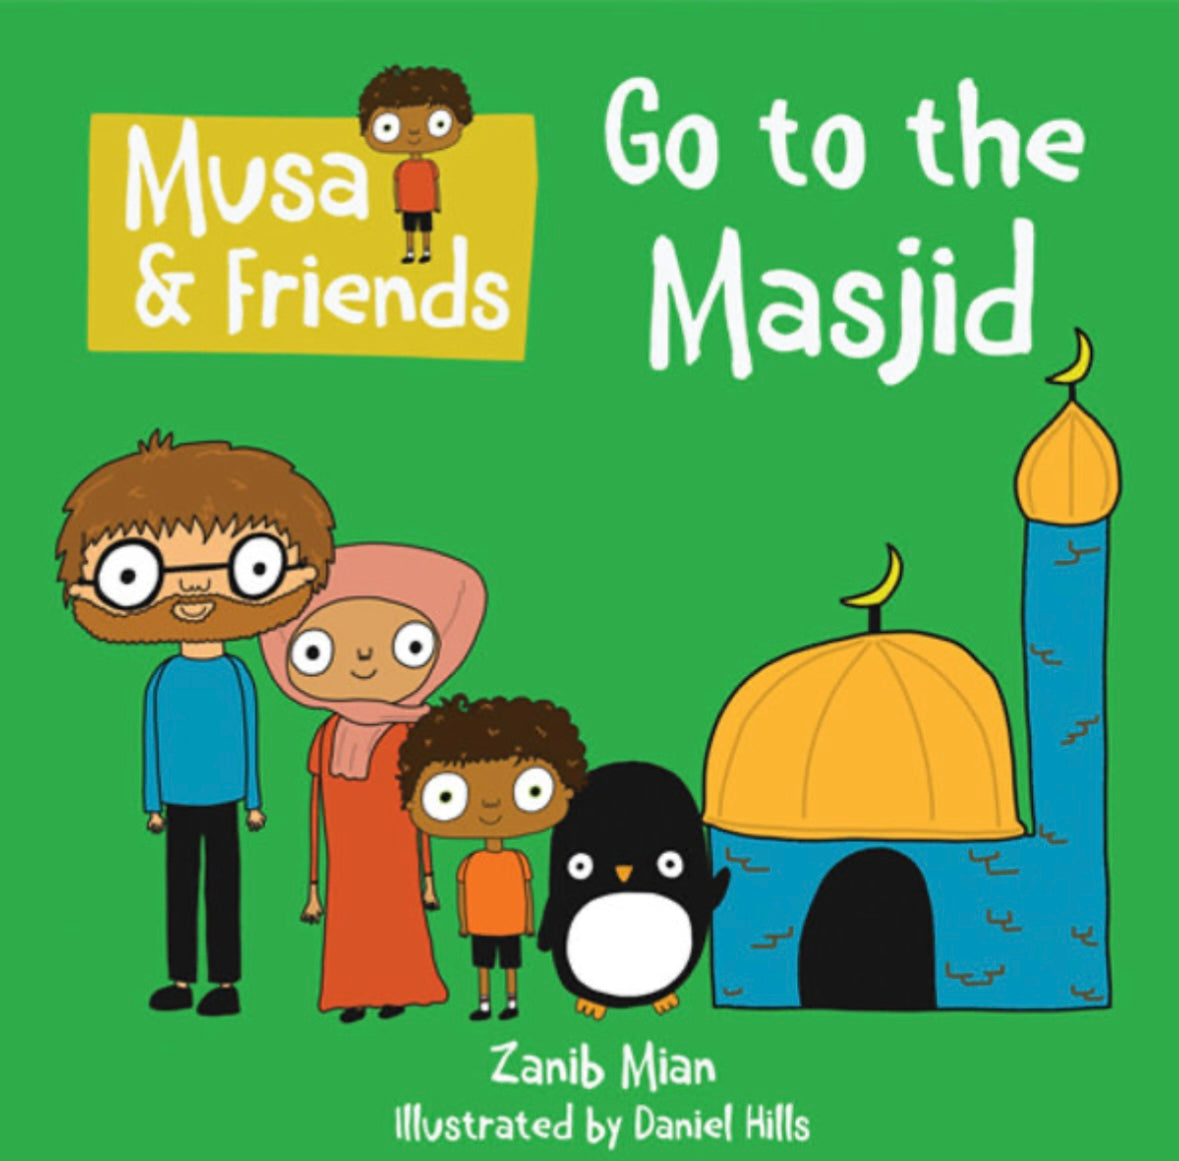 Musa & Friends Go to the Masjid | Zanib Mian